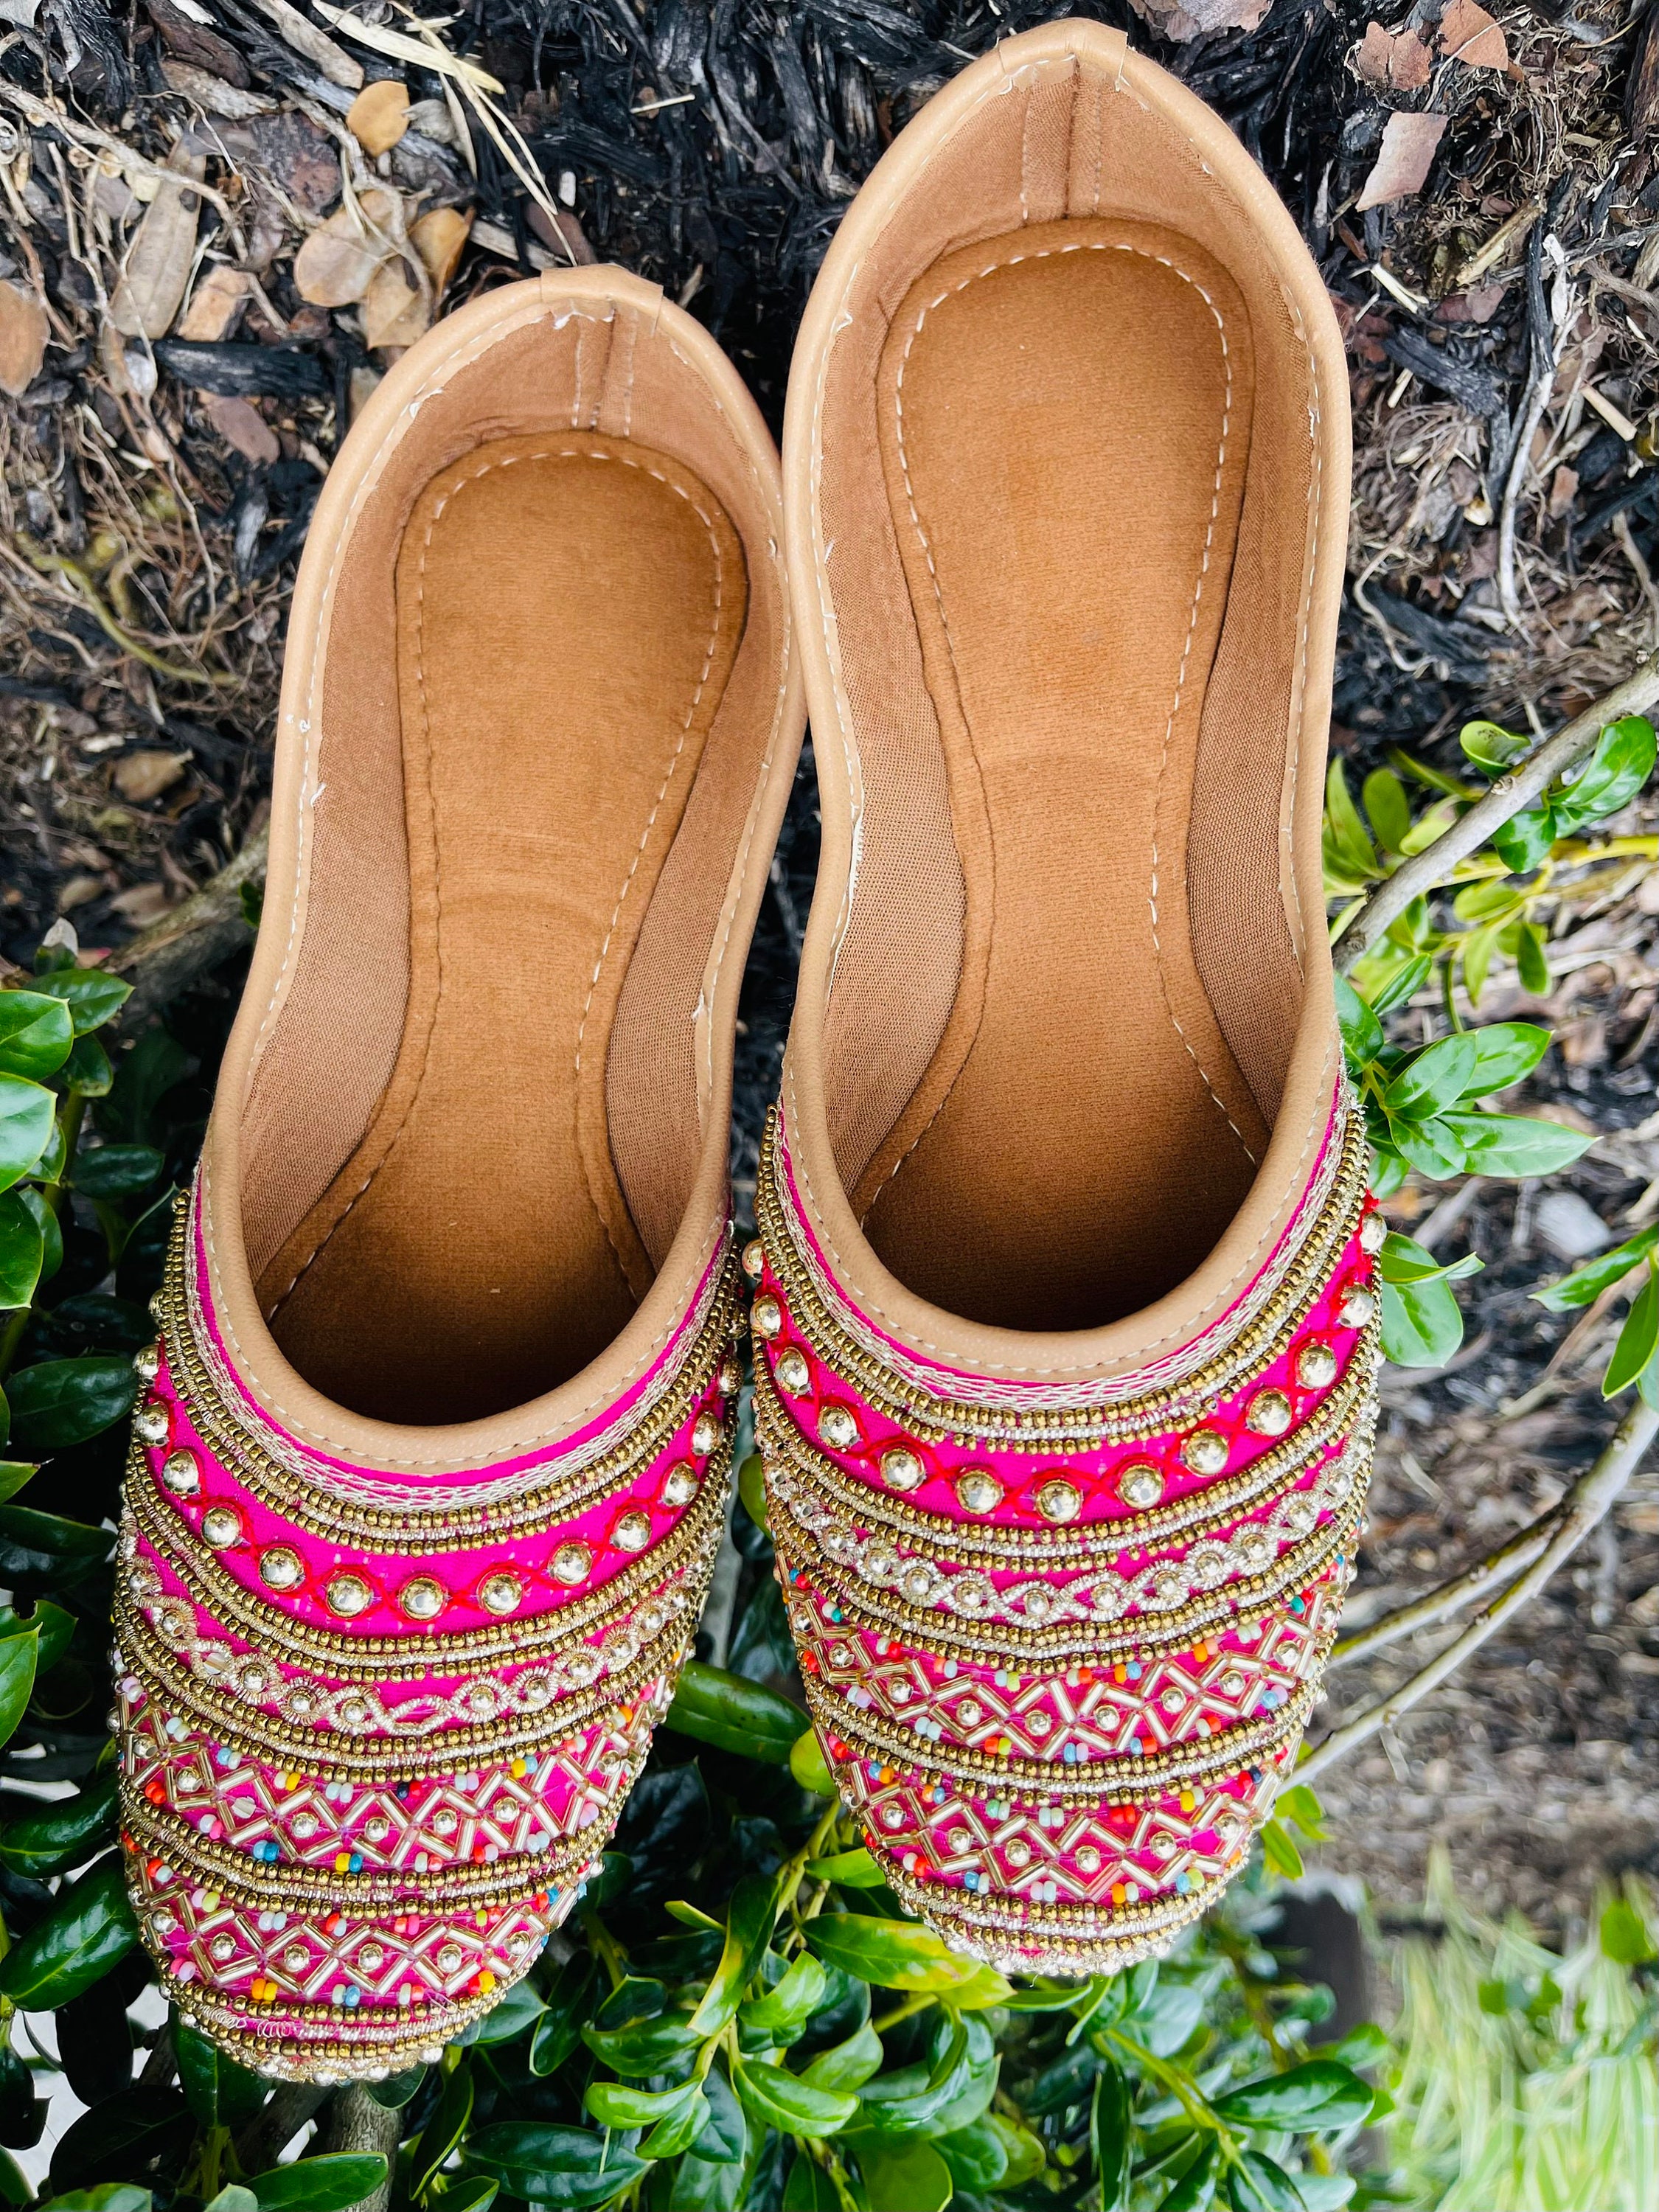 Adorable Punjabi de mujer Jutti Étnico Mojari Hecho a mano Punjabi jutti Zapatos Zapatos para mujer Zapatos sin cordones Mocasines zapatos de fiesta Diseño hecho a mano zapatos de boda Khussa para damas 